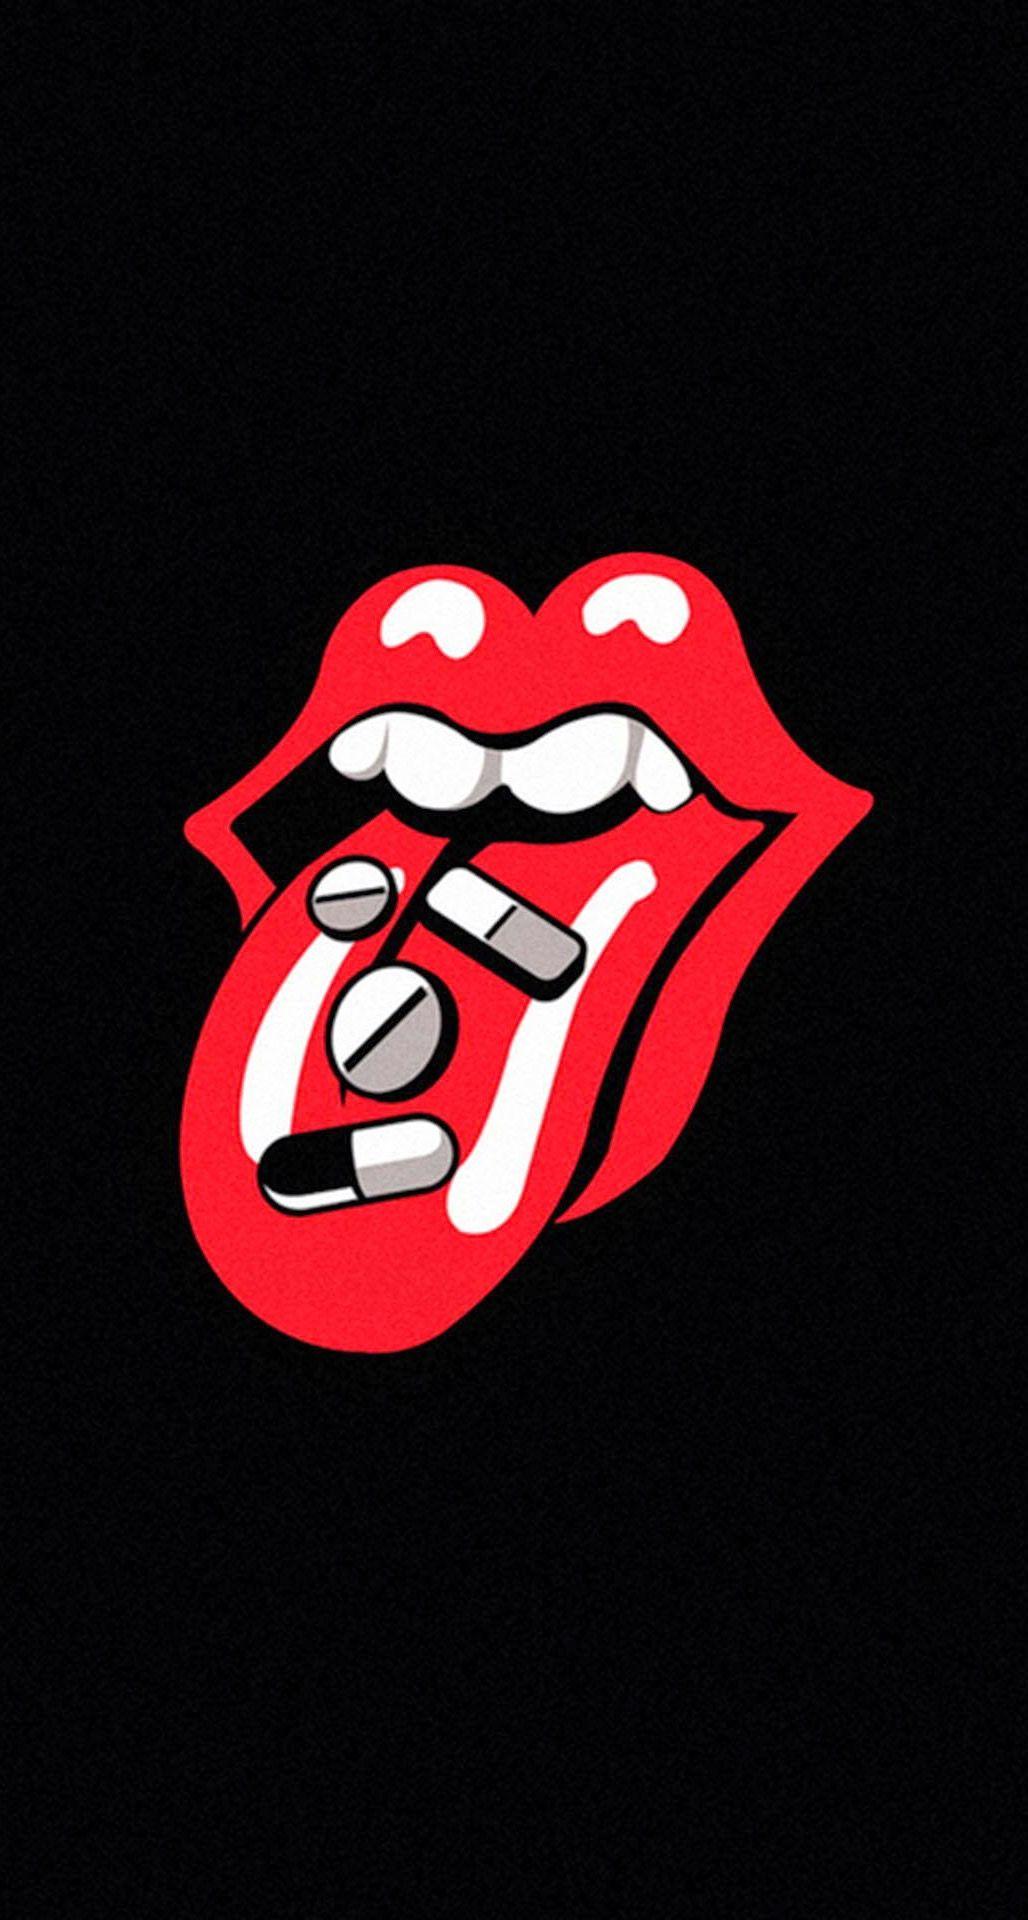 Rolling Stones Tongue Pills Drugs iPhone 6 Plus HD Wallpaper HD